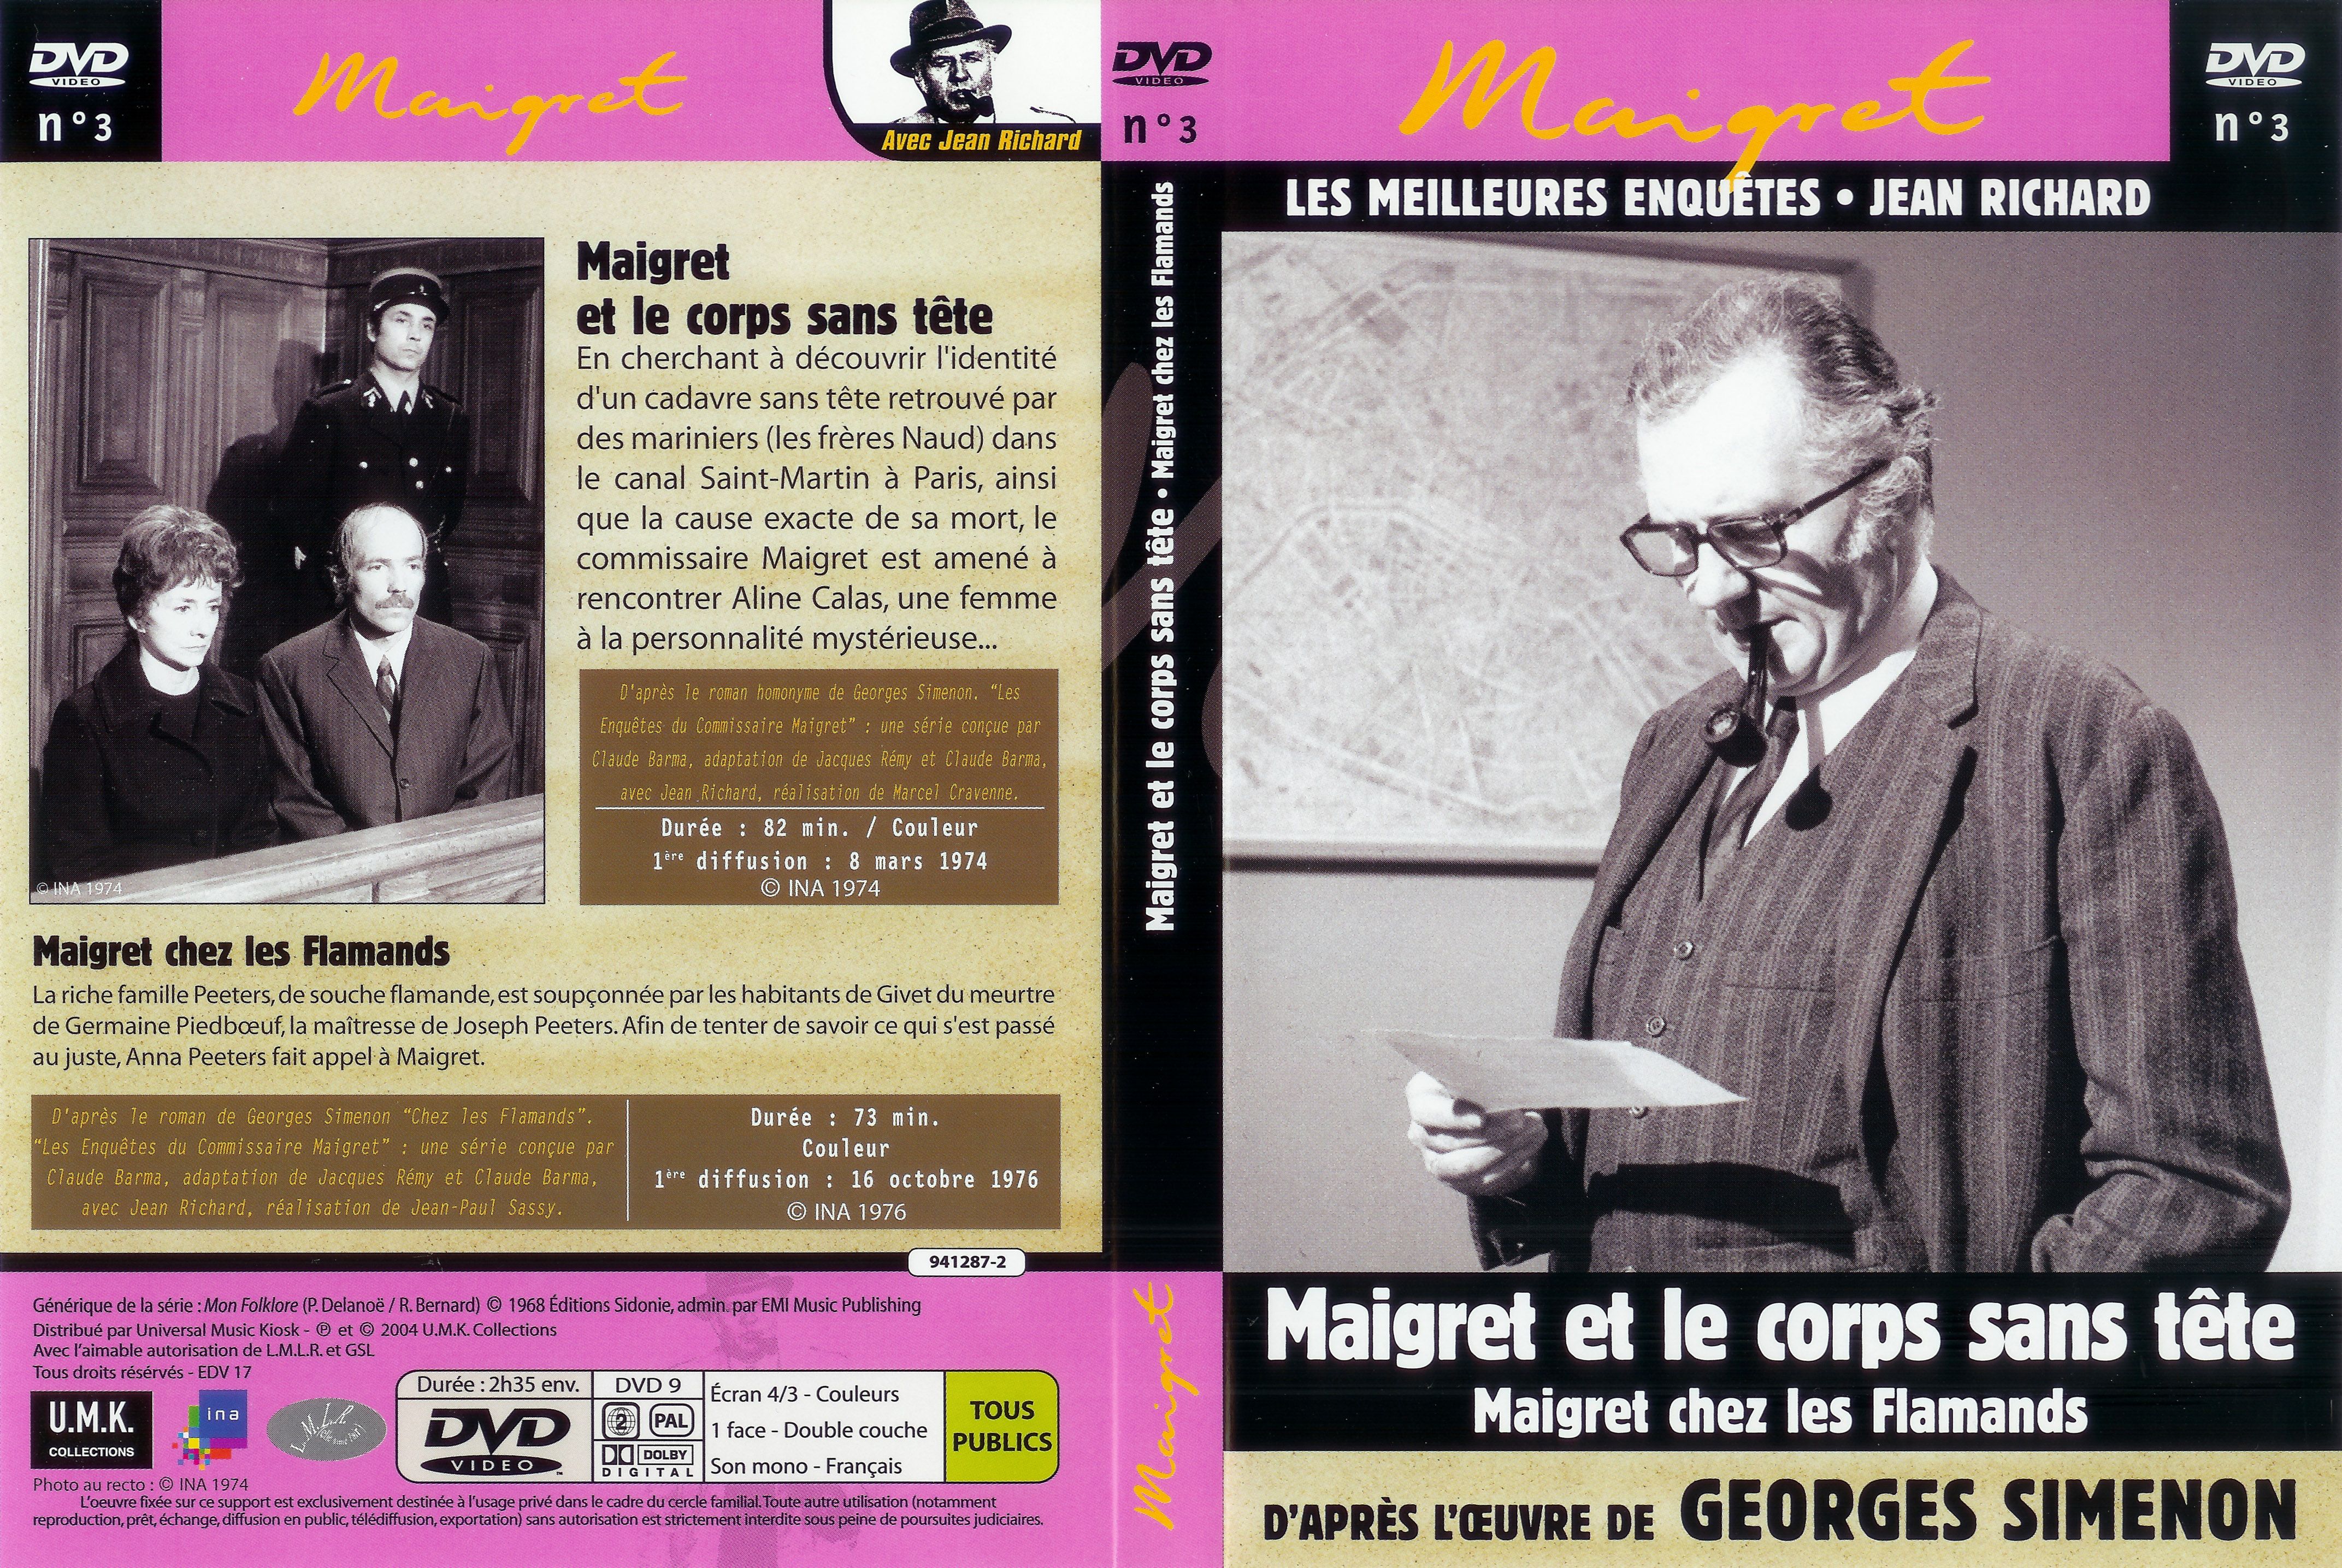 Jaquette DVD Maigret (Jean Richard) vol 03